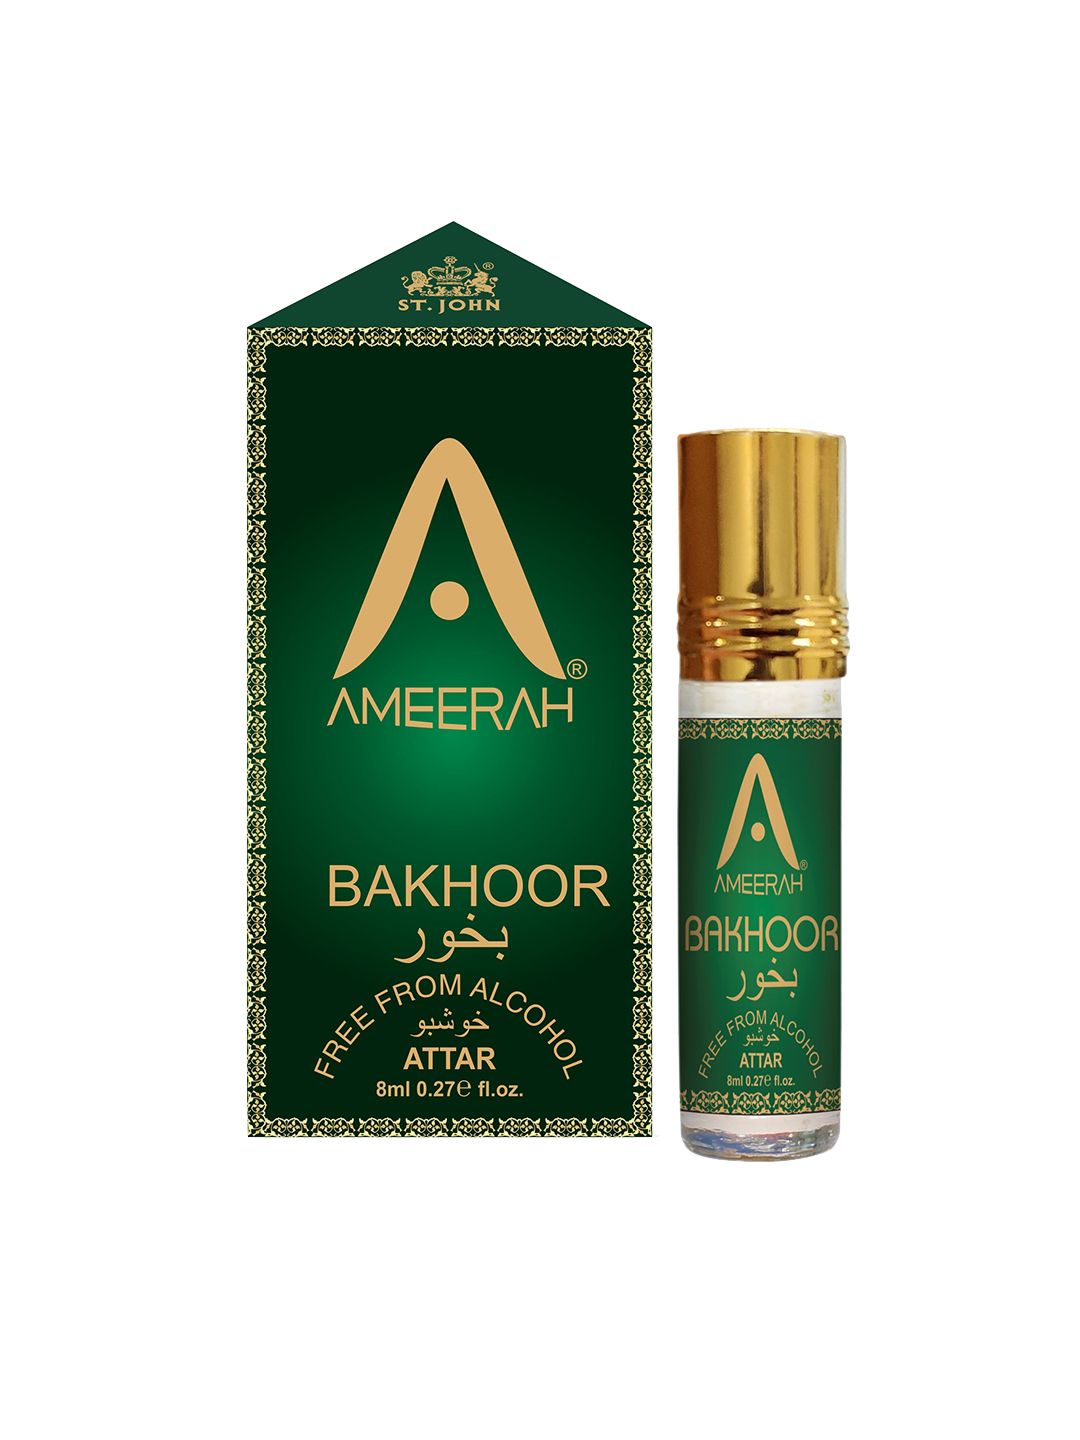 St. John Ameerah Bakhoor Attar - 8 ml Price in India